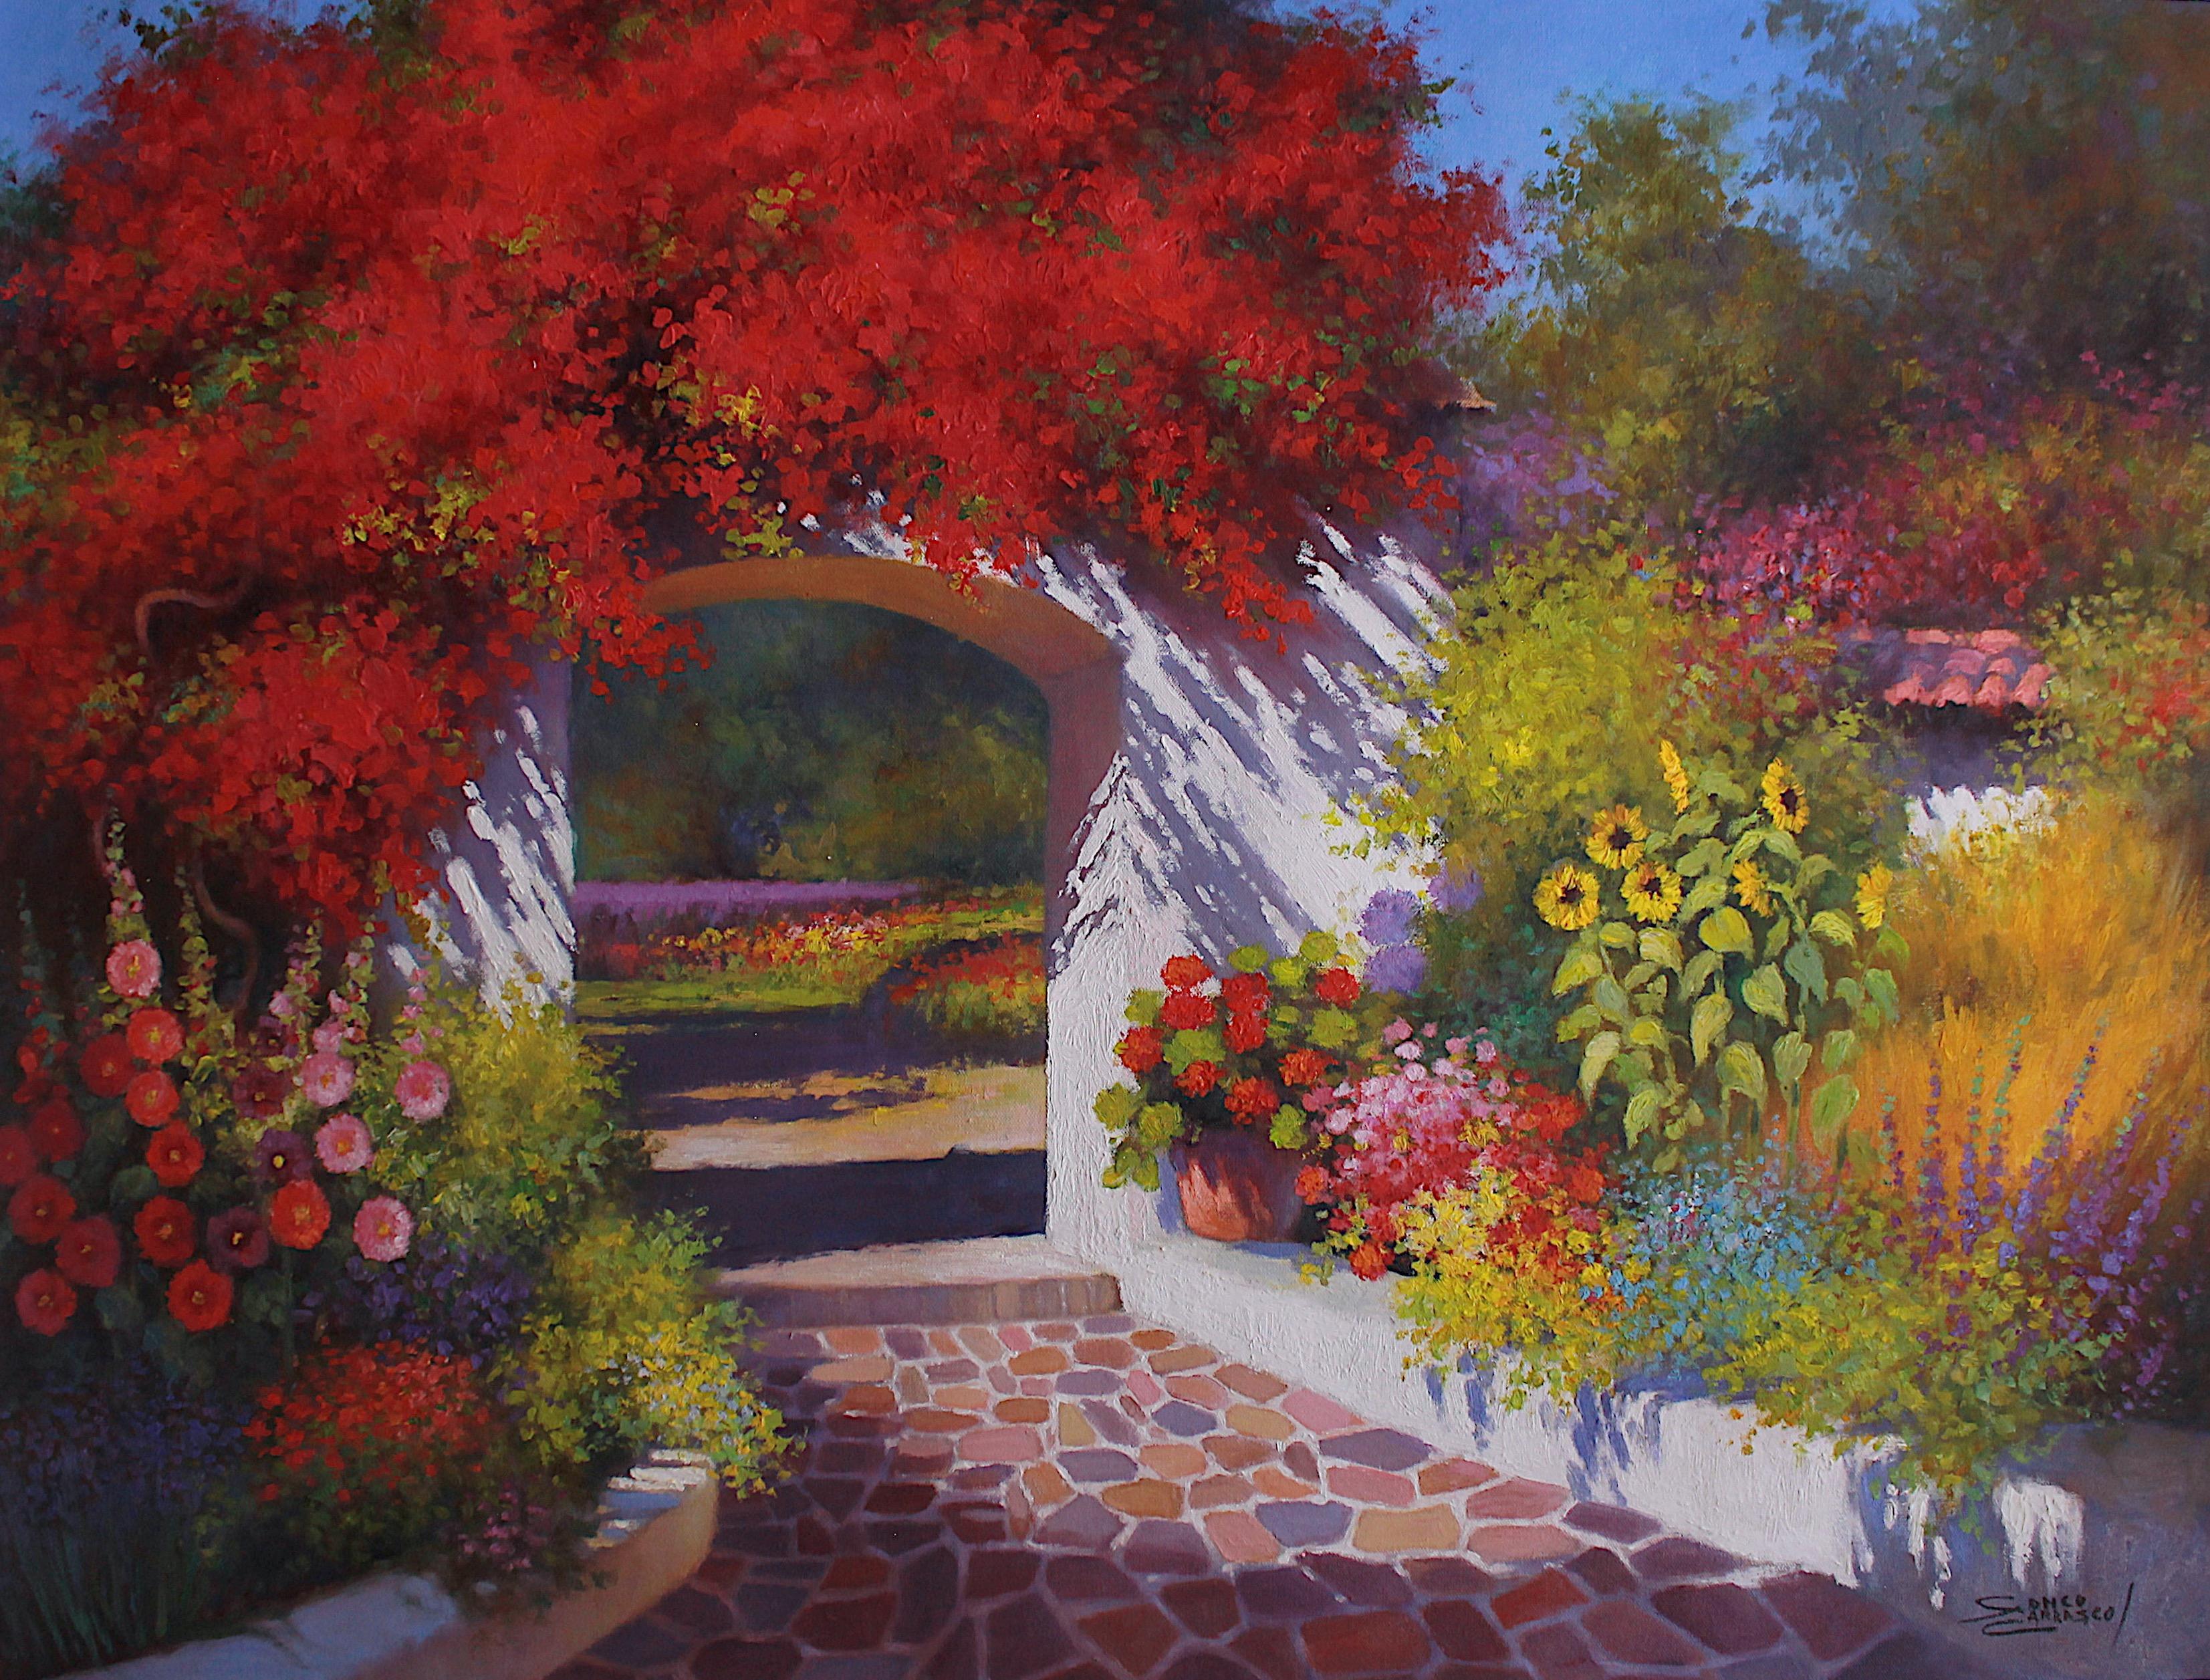 Sonco Carrasco Landscape Painting - Floral Pathway - Original oil painting - Impressionist